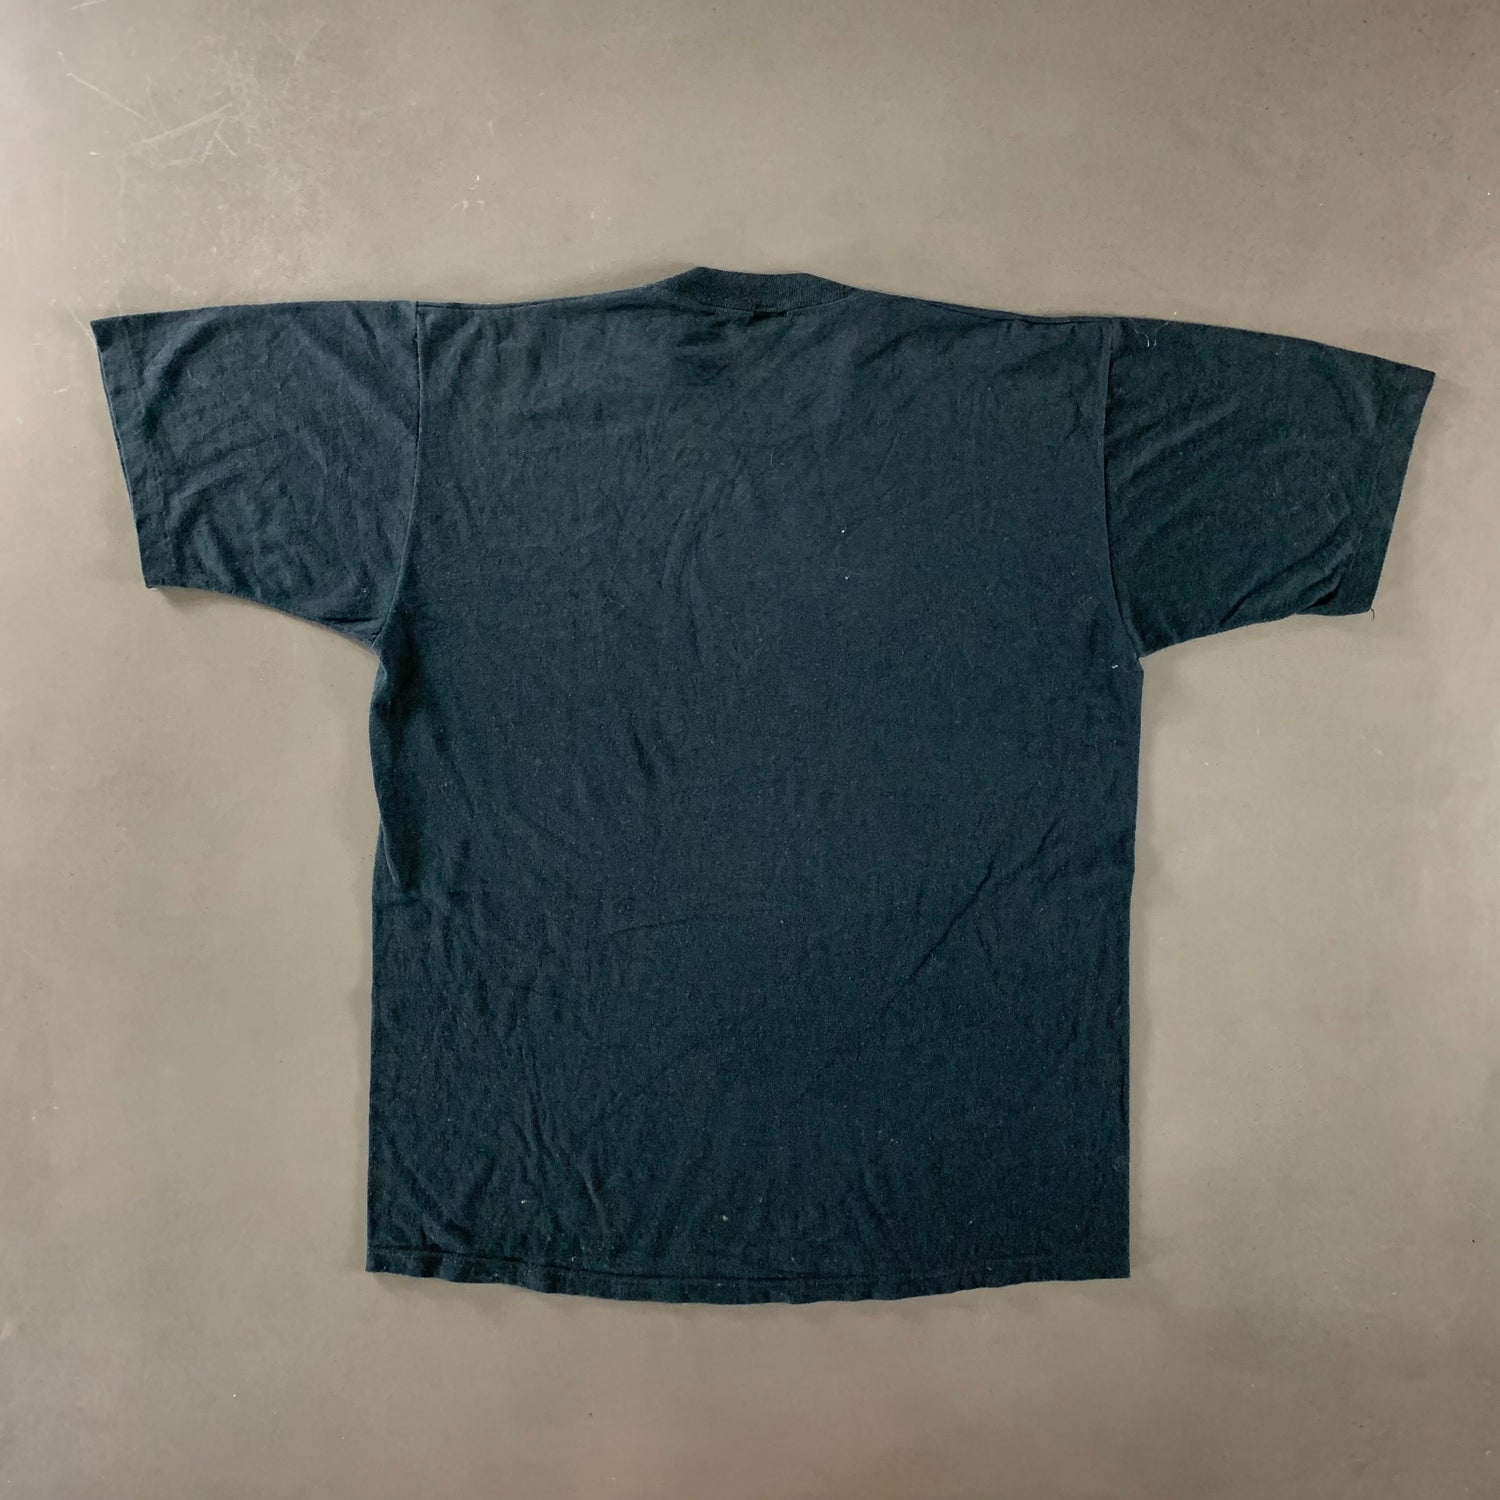 Vintage 1980s Starkville T-shirt size Large